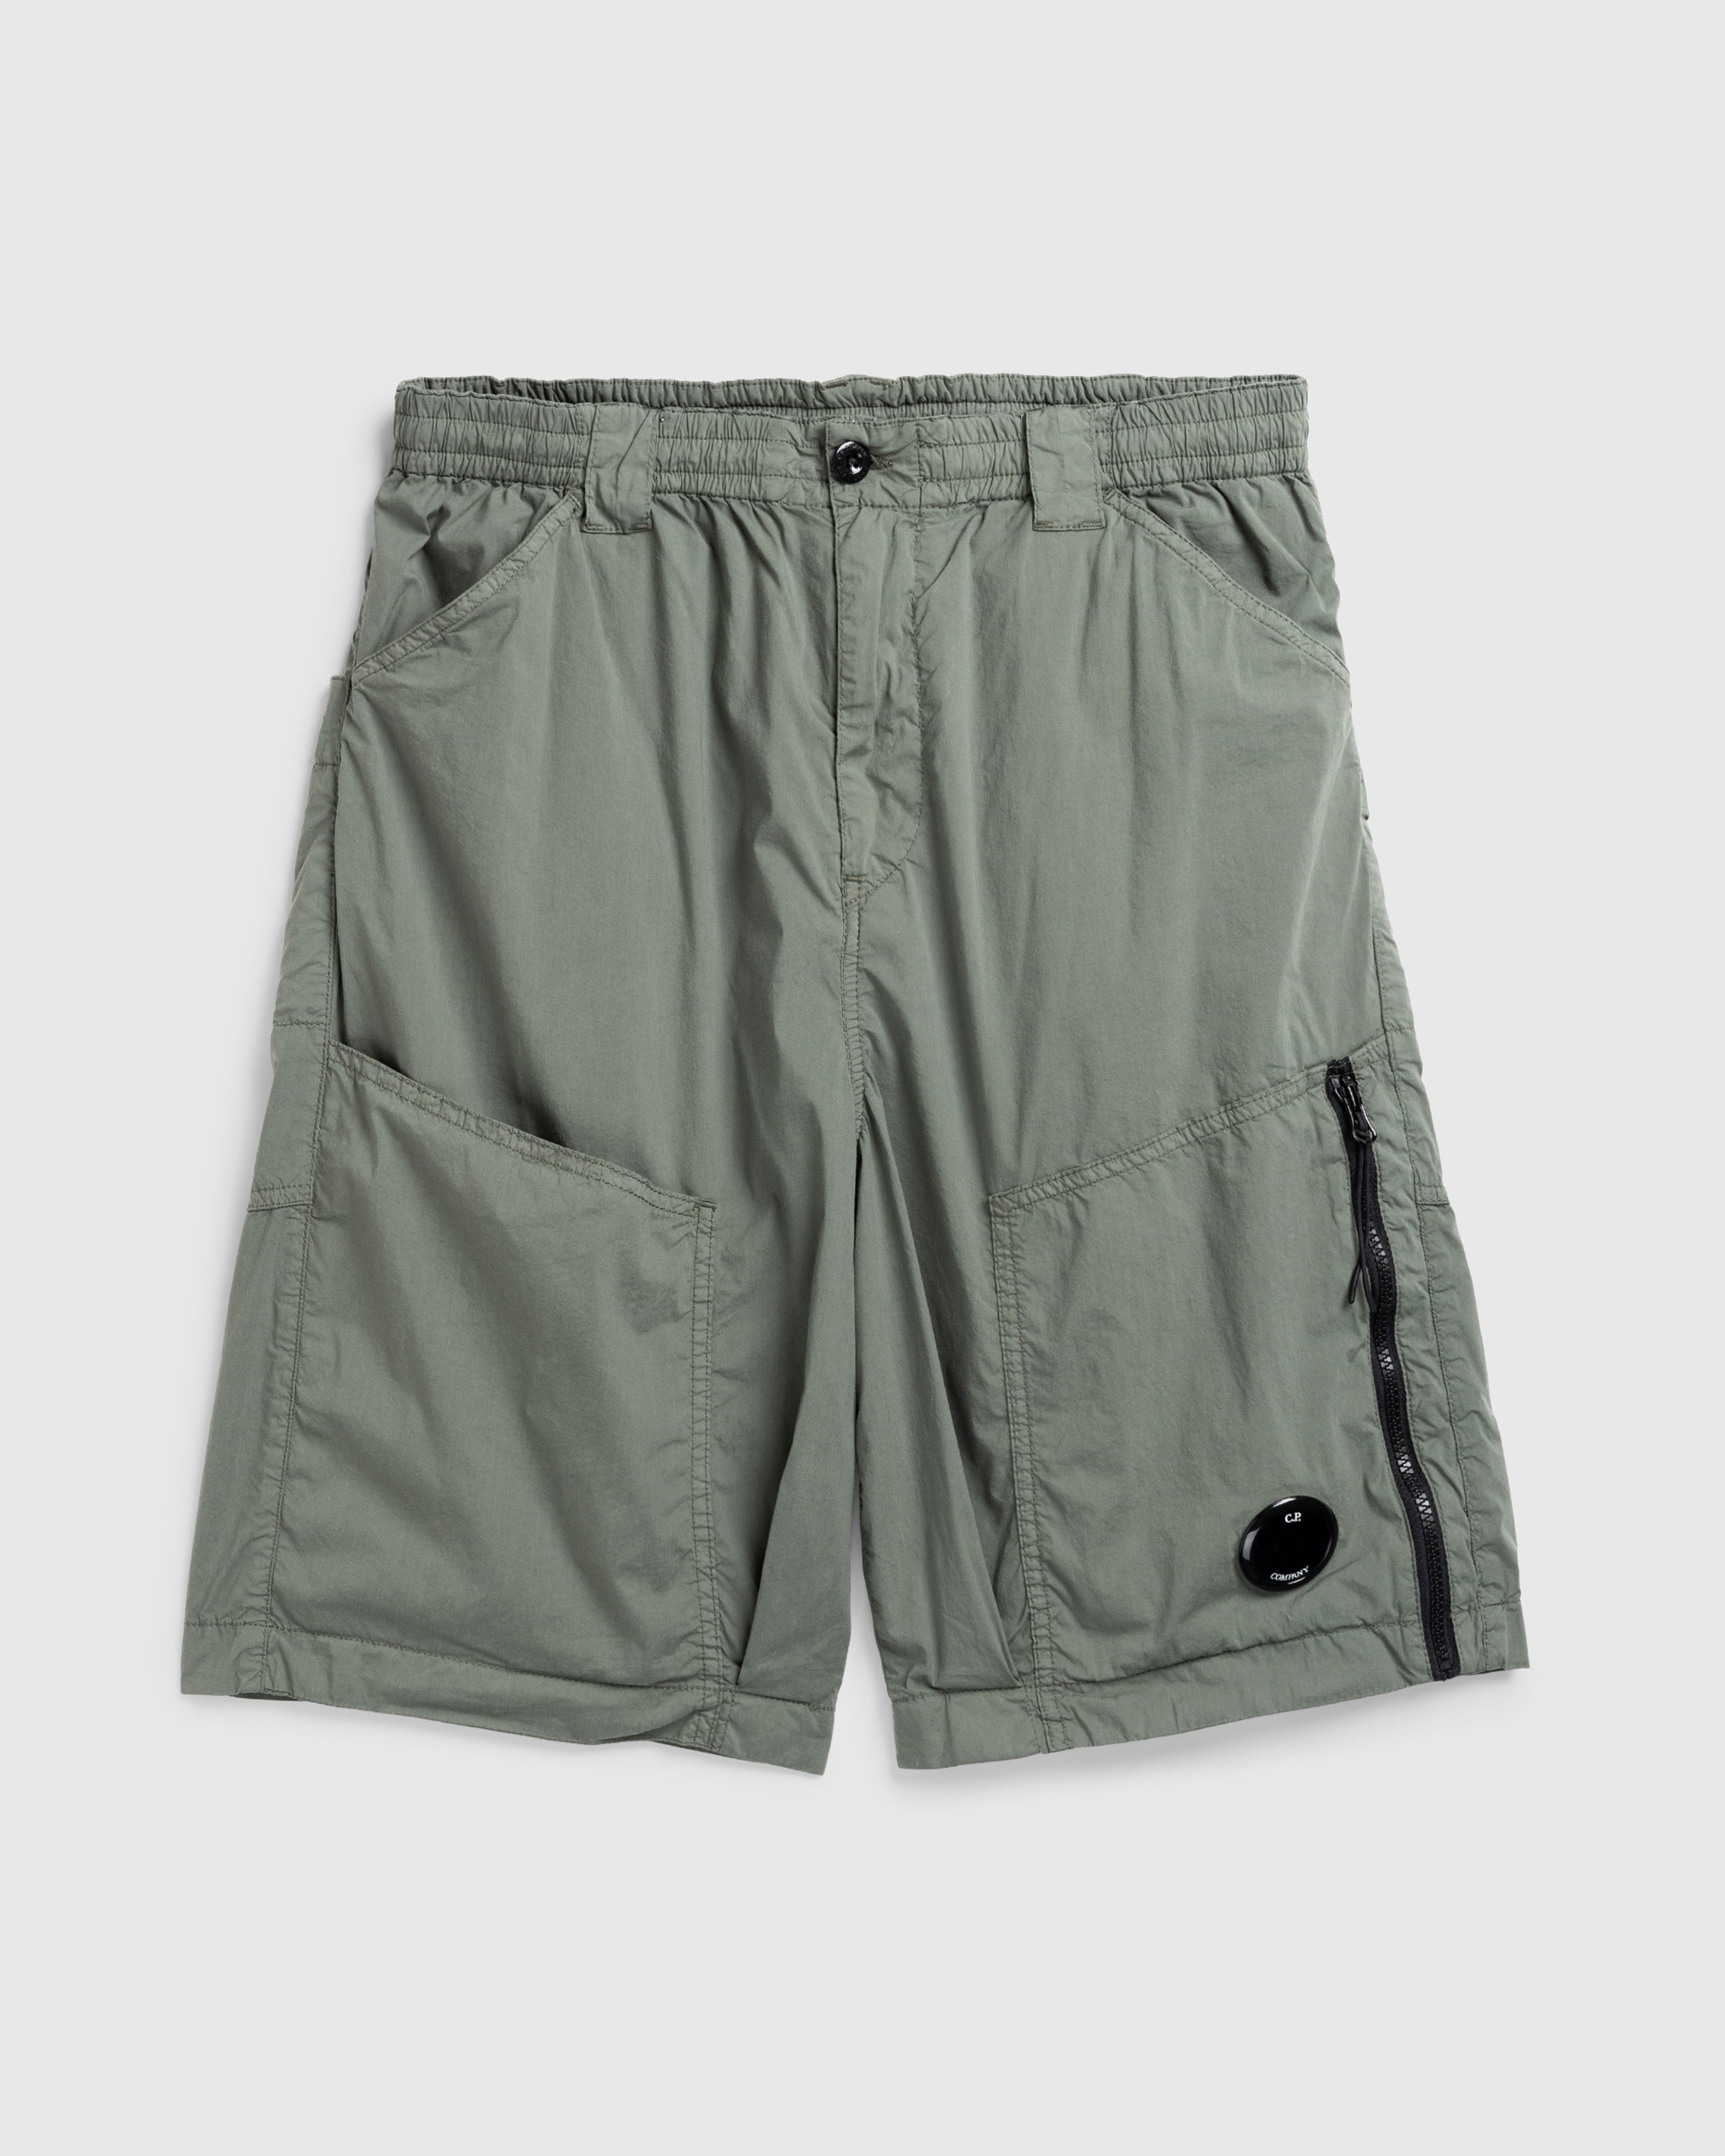 C.P. Company – Bermuda Cargo Shorts Agave Green - Shorts - Green - Image 1